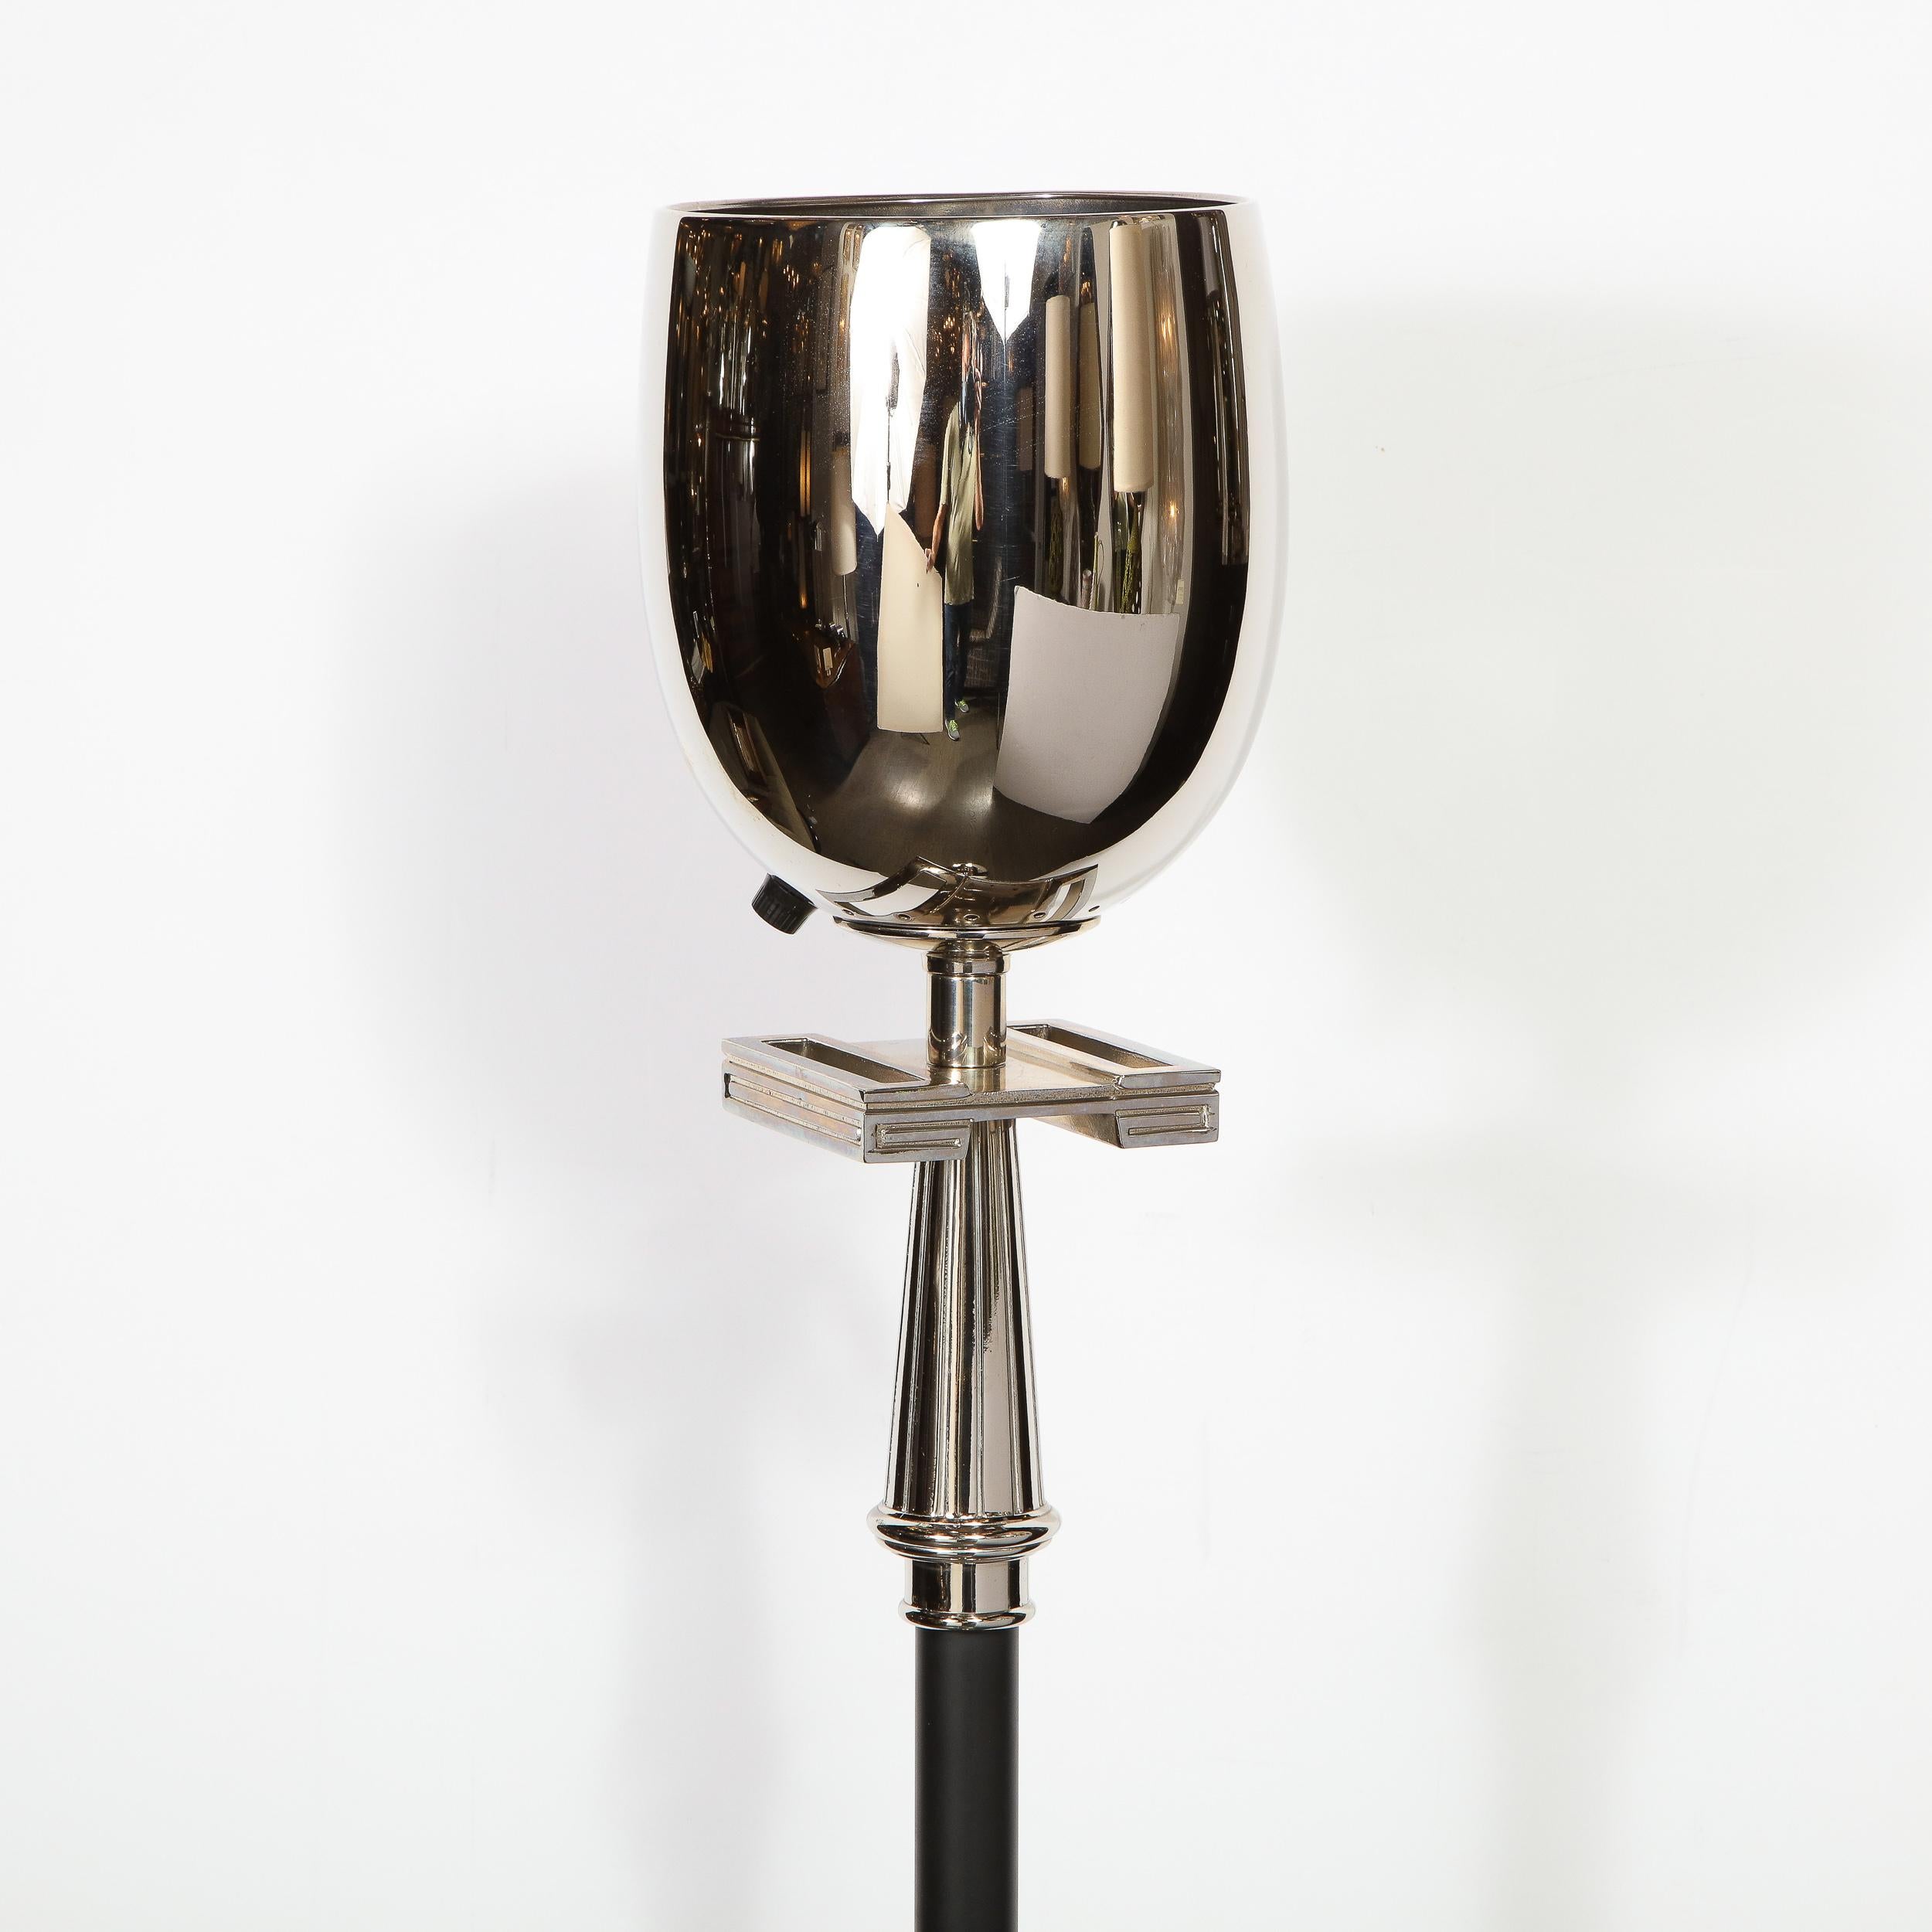 Mid-20th Century Midcentury Polished Nickel & Black Enamel Floor Lamp, Manner of Tommi Parzinger